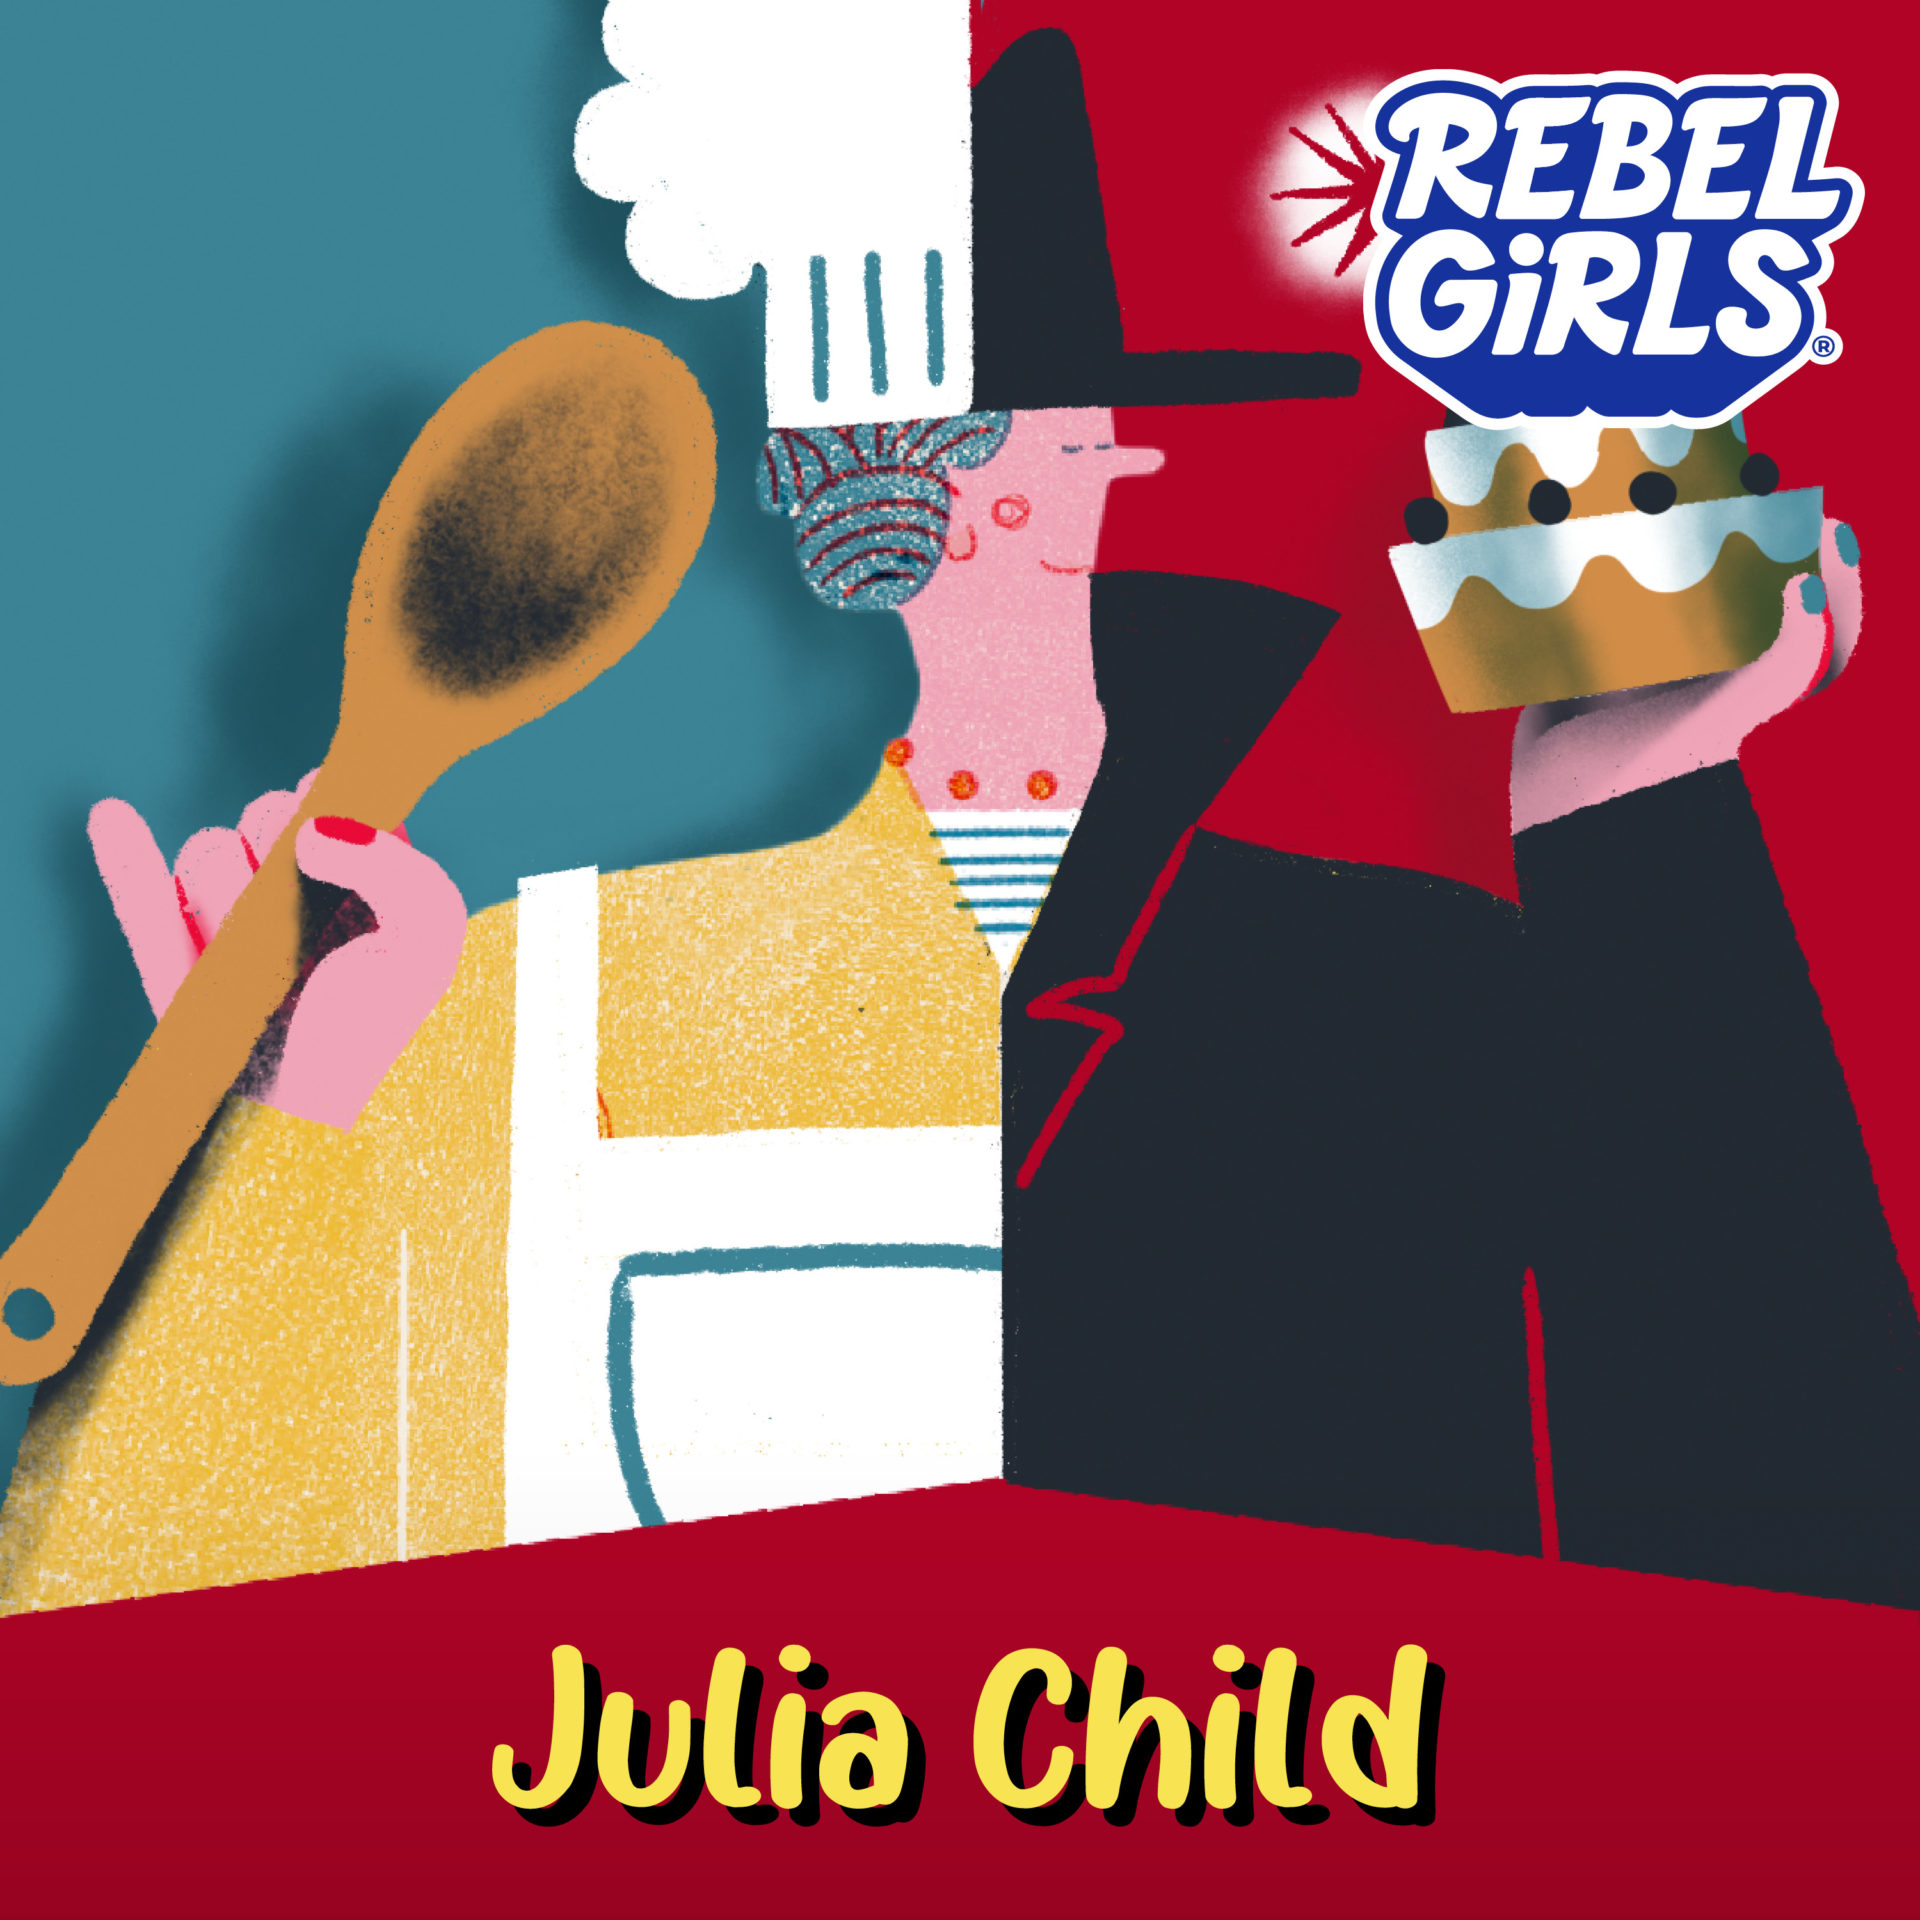 https://explore.rebelgirls.com/wp-content/uploads/2021/03/Julia-Child-1.jpg